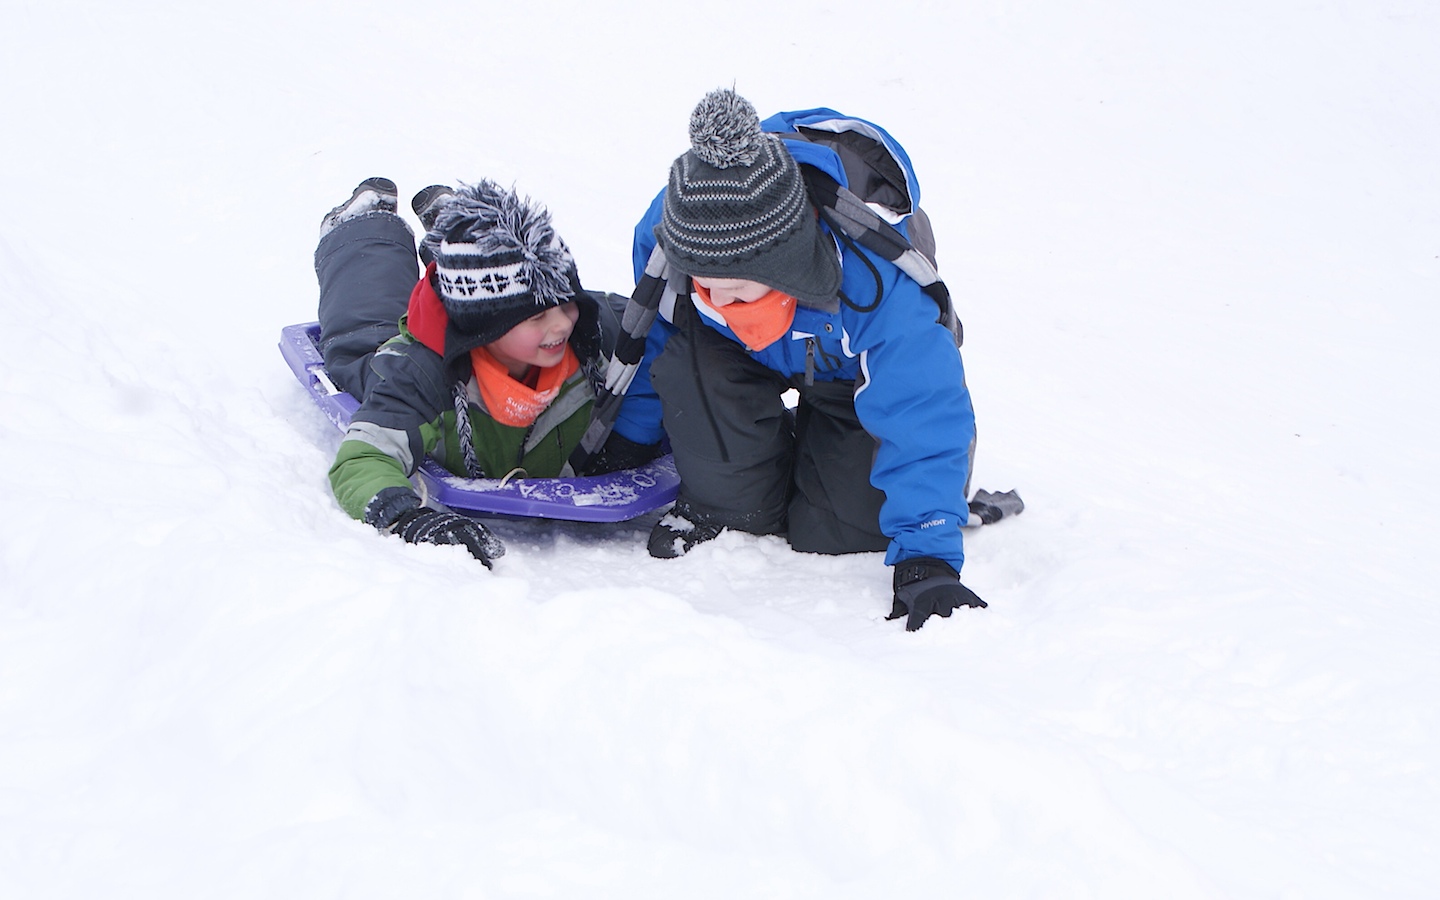 2 kids sledding down a snowy hill